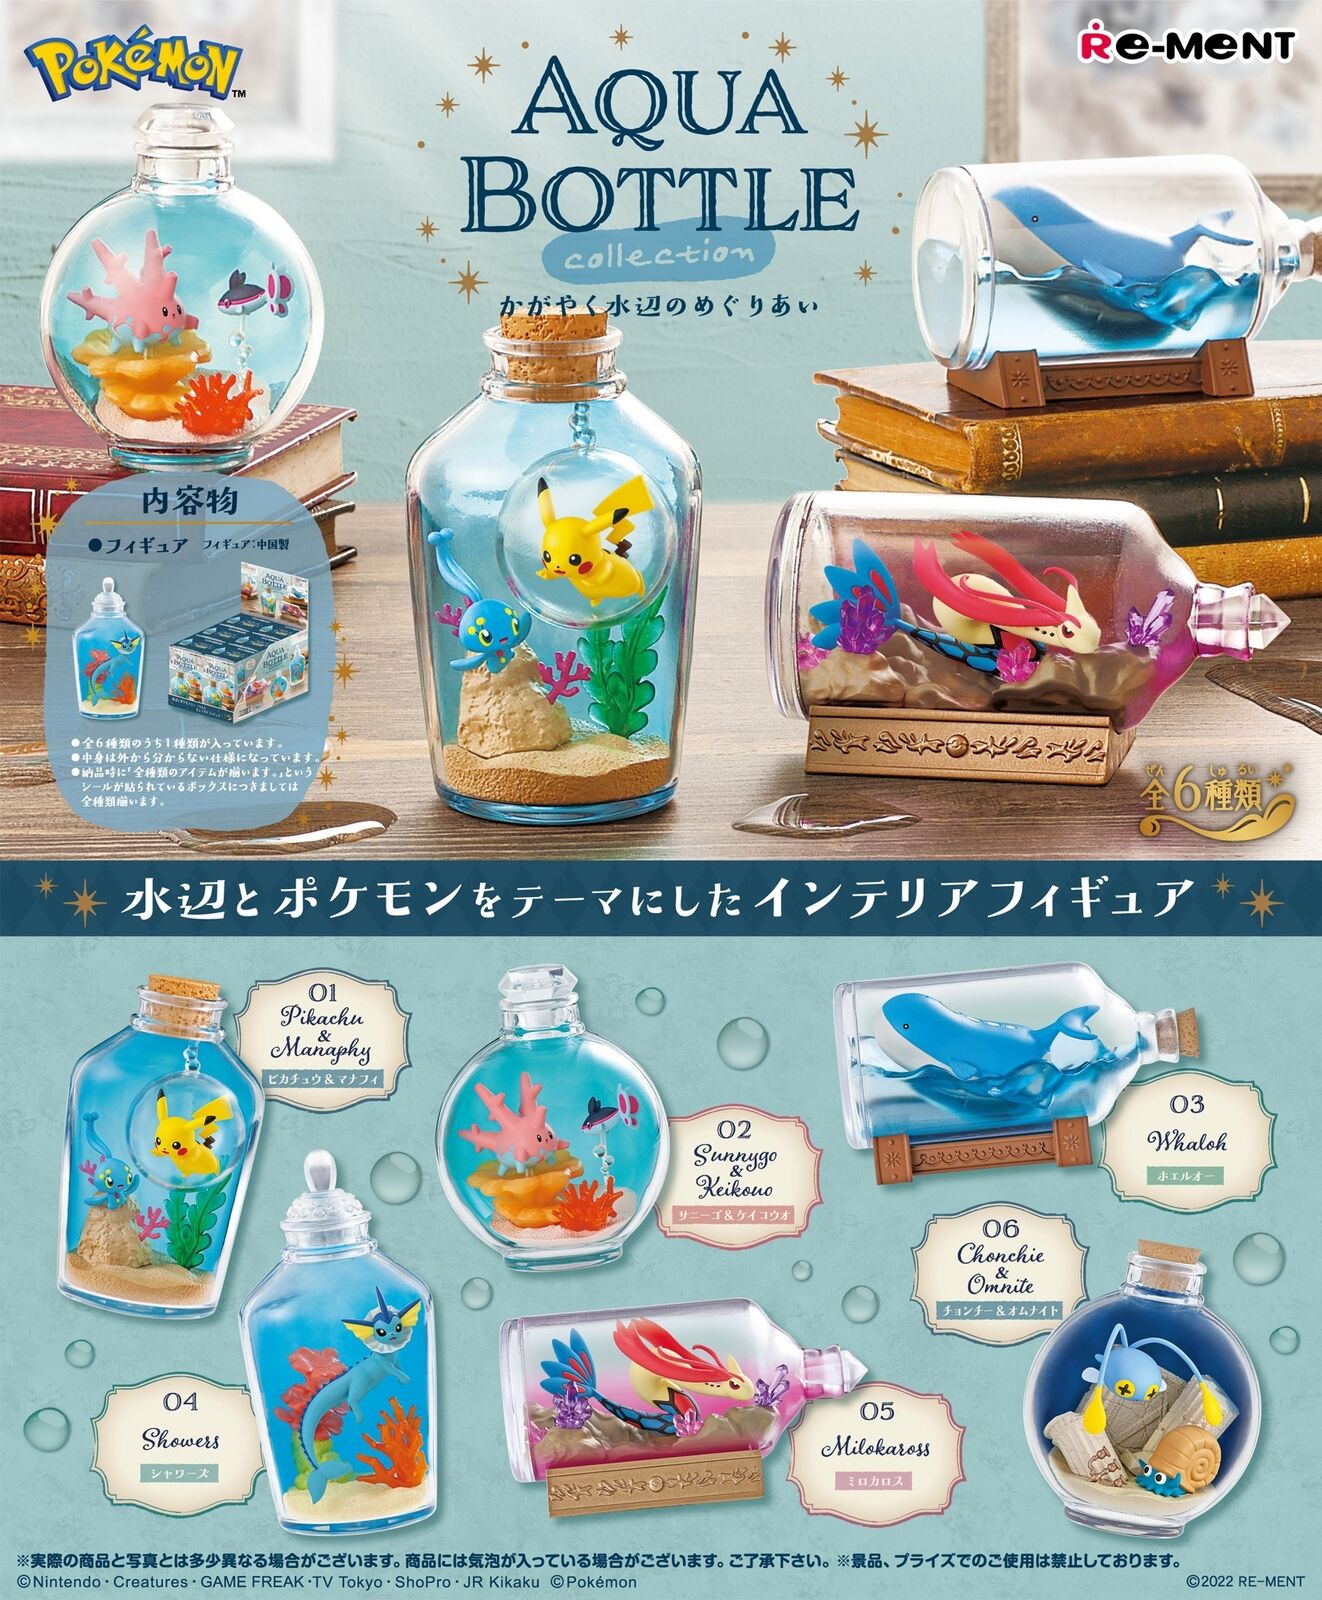 Re-Ment Pokemon Aqua Bottle Collection - Full Set of 6